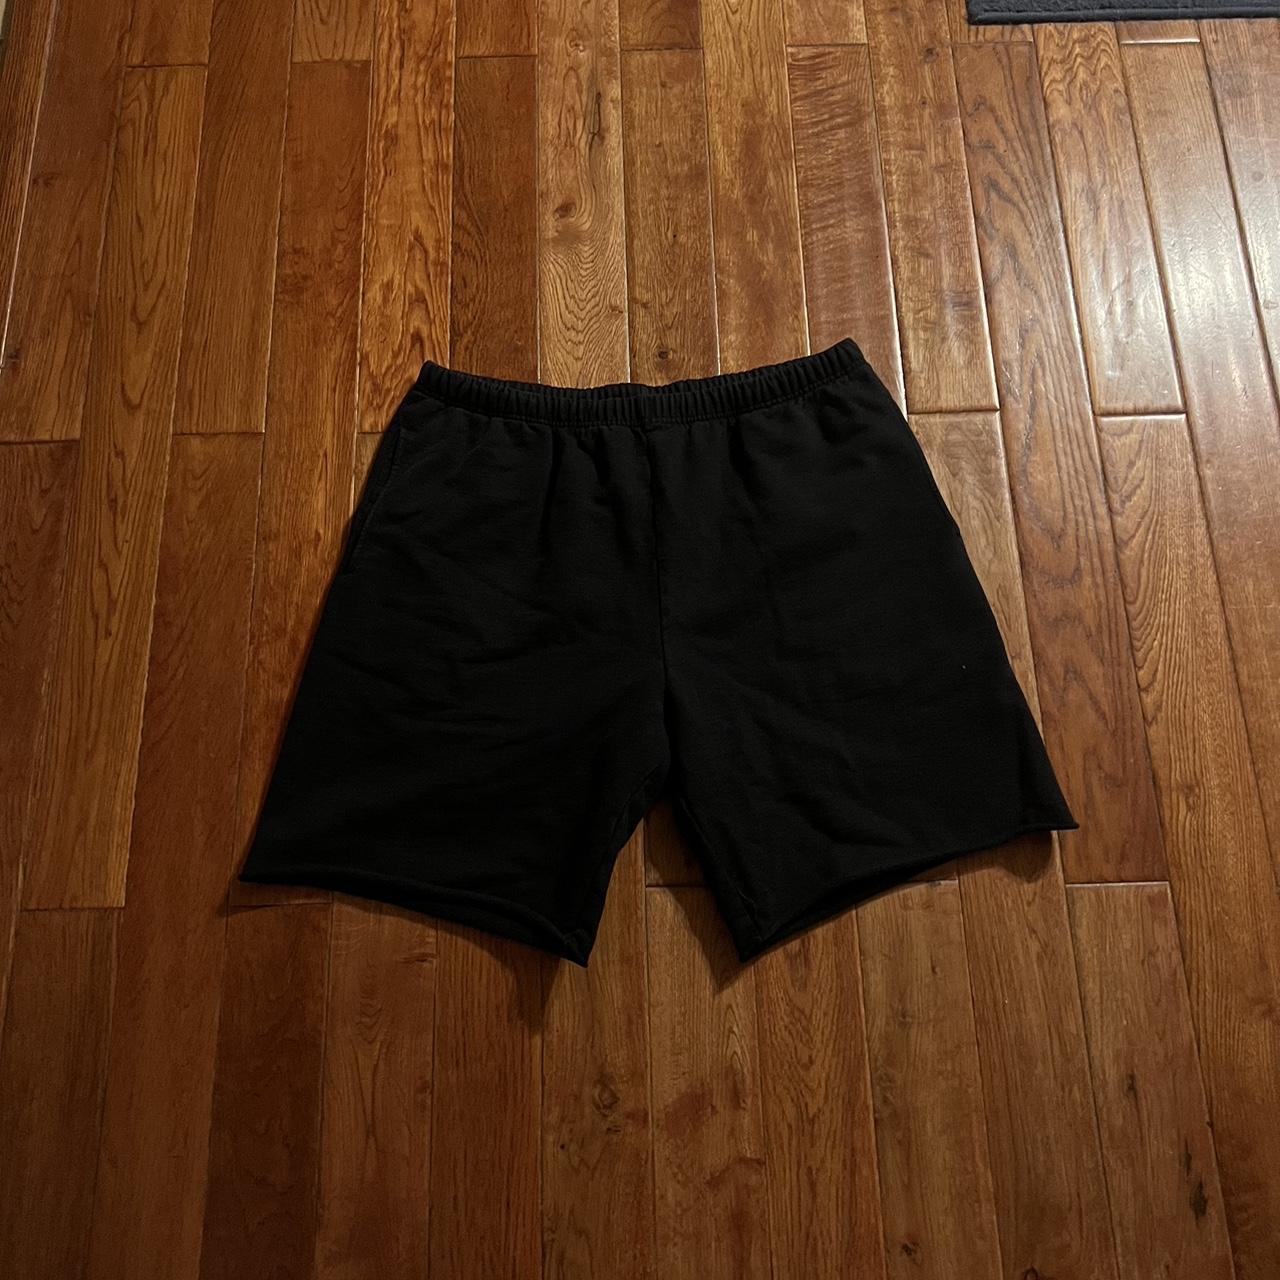 Supreme swim shorts. Brand new with bag, never - Depop